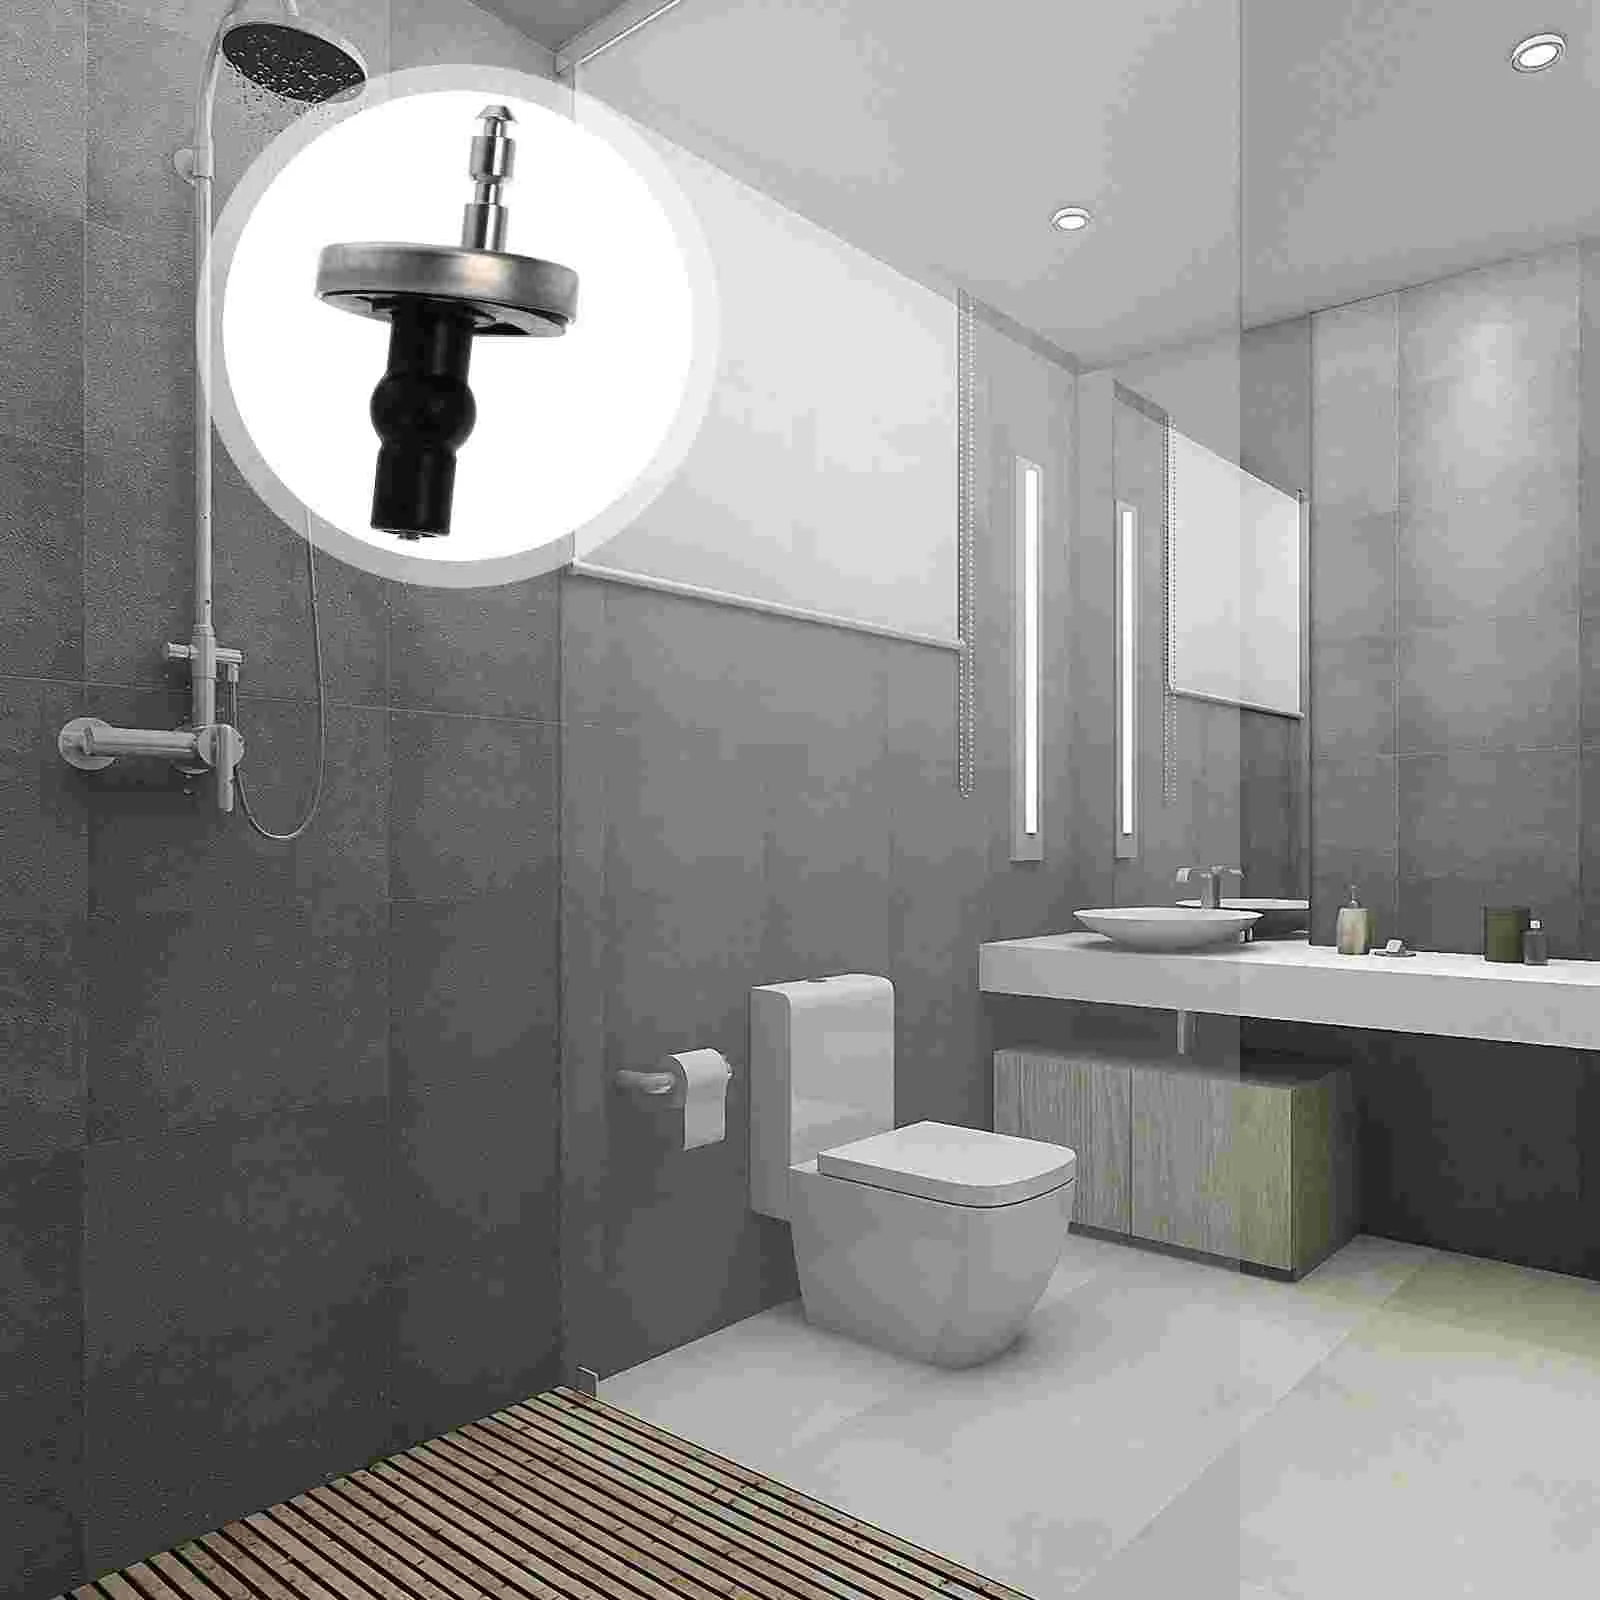 

2pcs Toilet Hinge Toilet Hinge Fixings Toilet Fixing Part Fixing Universal Fixing Expansion Screw Cover Buckle Black, Silver